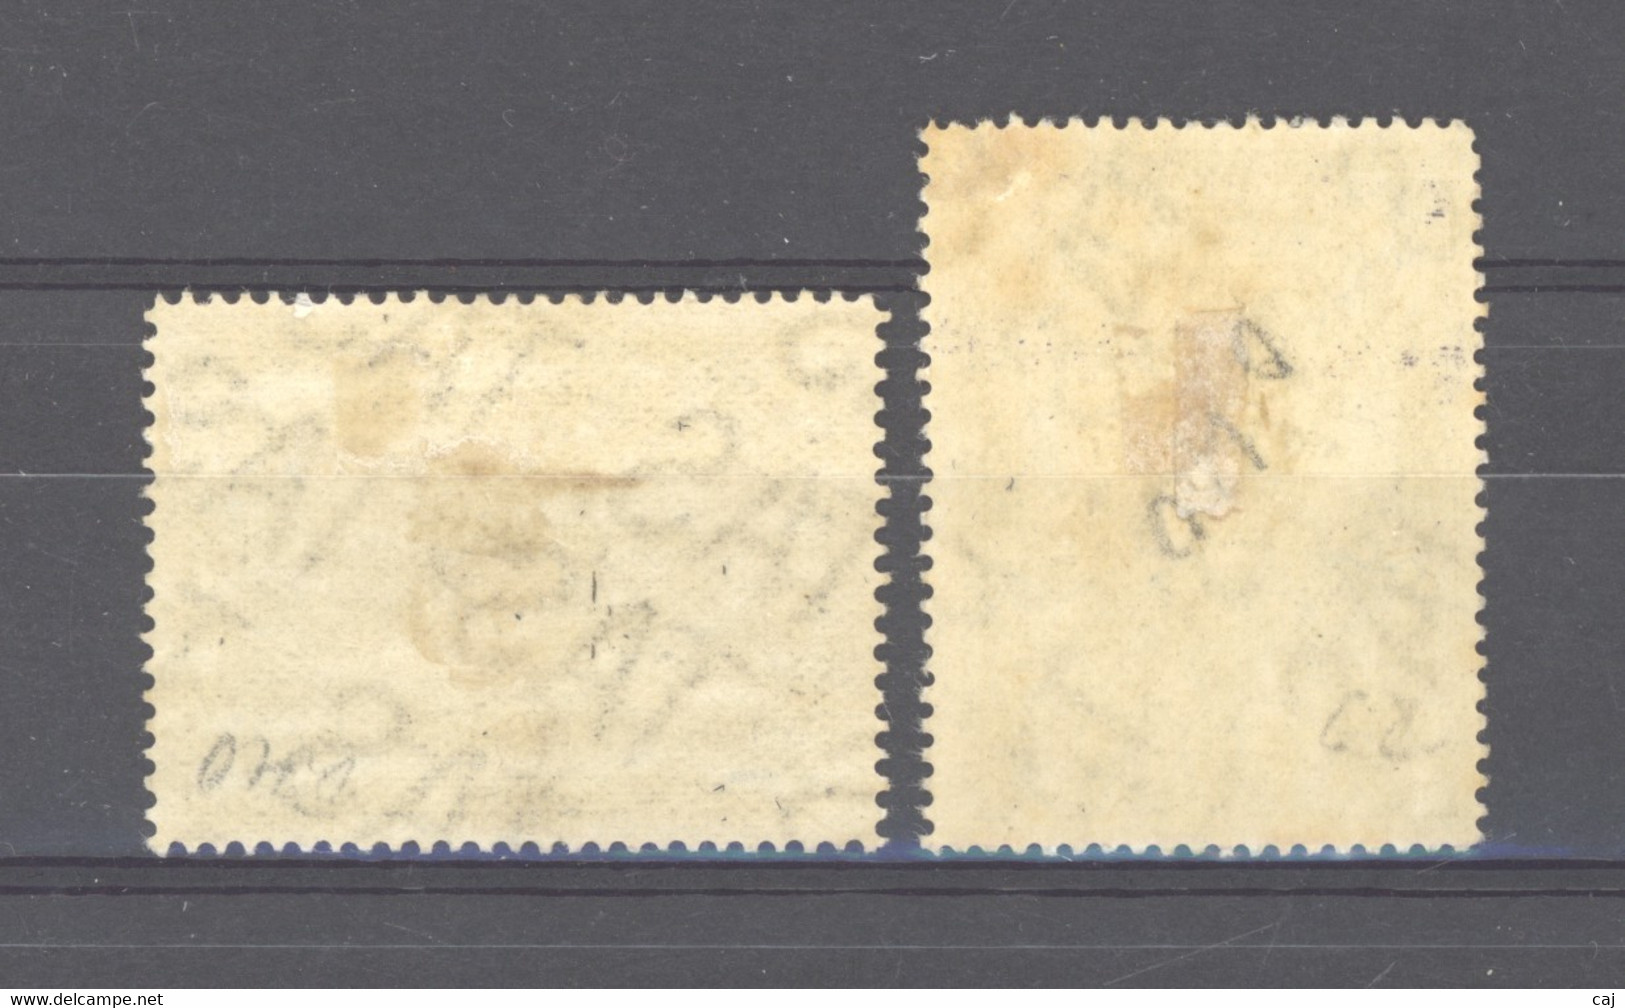 Tasmanie  :  Yv  61-62  * - Mint Stamps